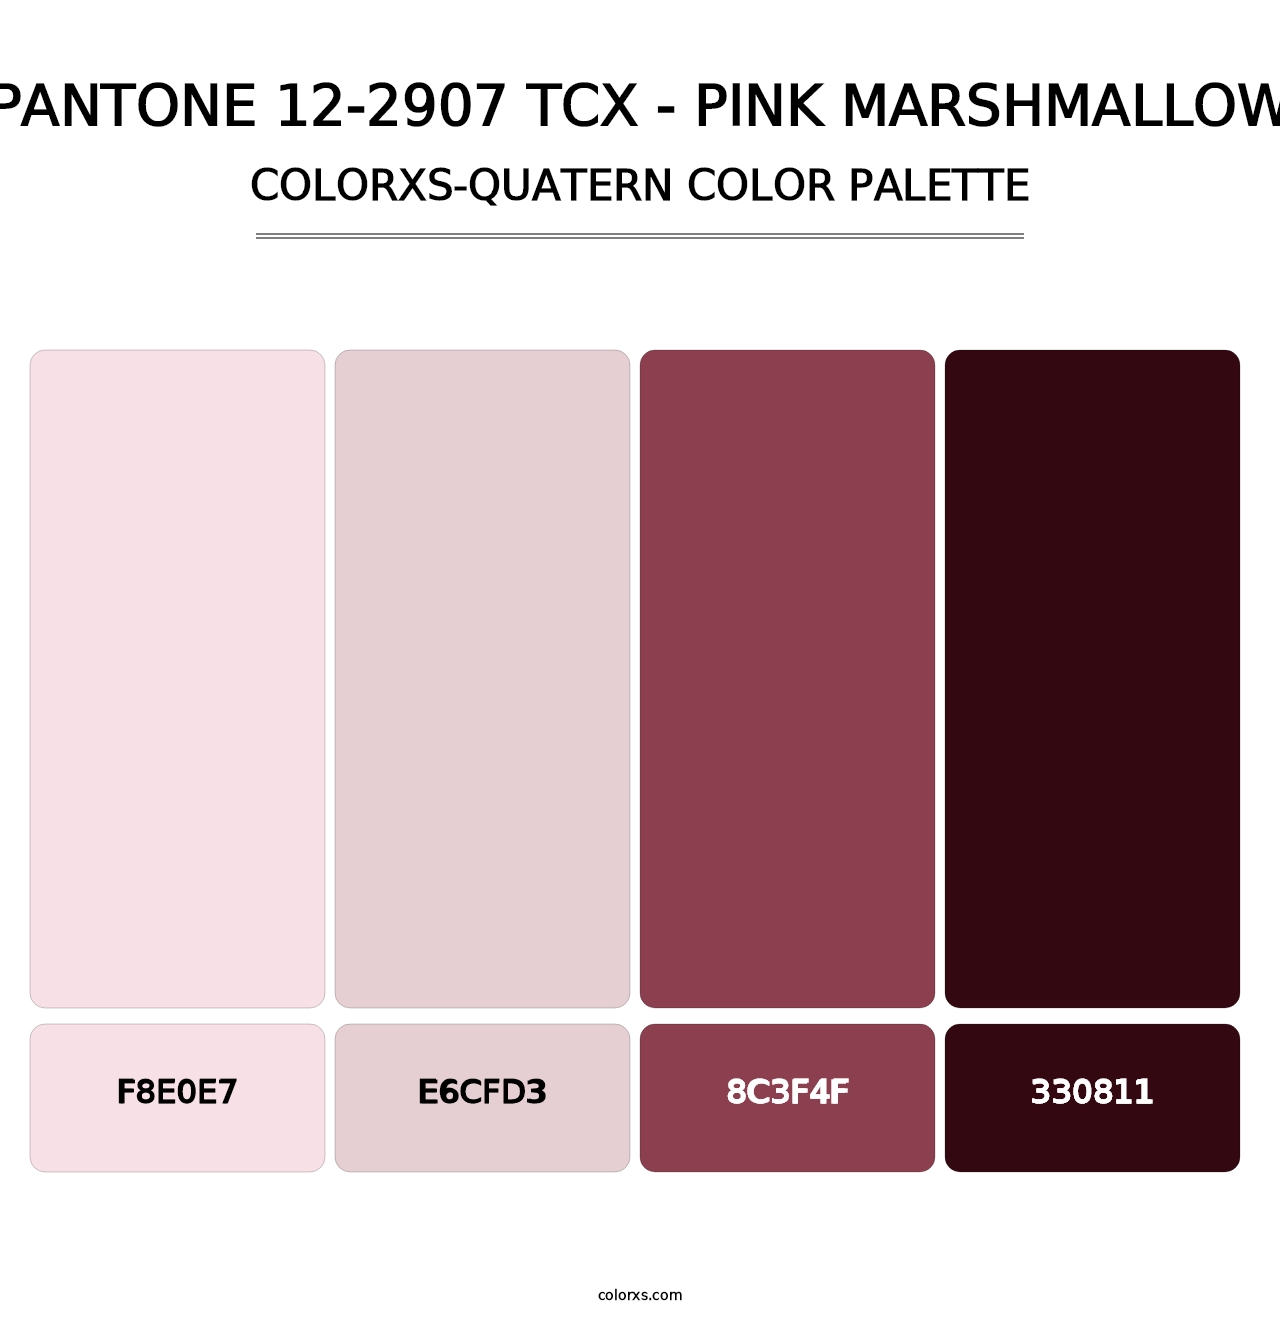 PANTONE 12-2907 TCX - Pink Marshmallow - Colorxs Quatern Palette